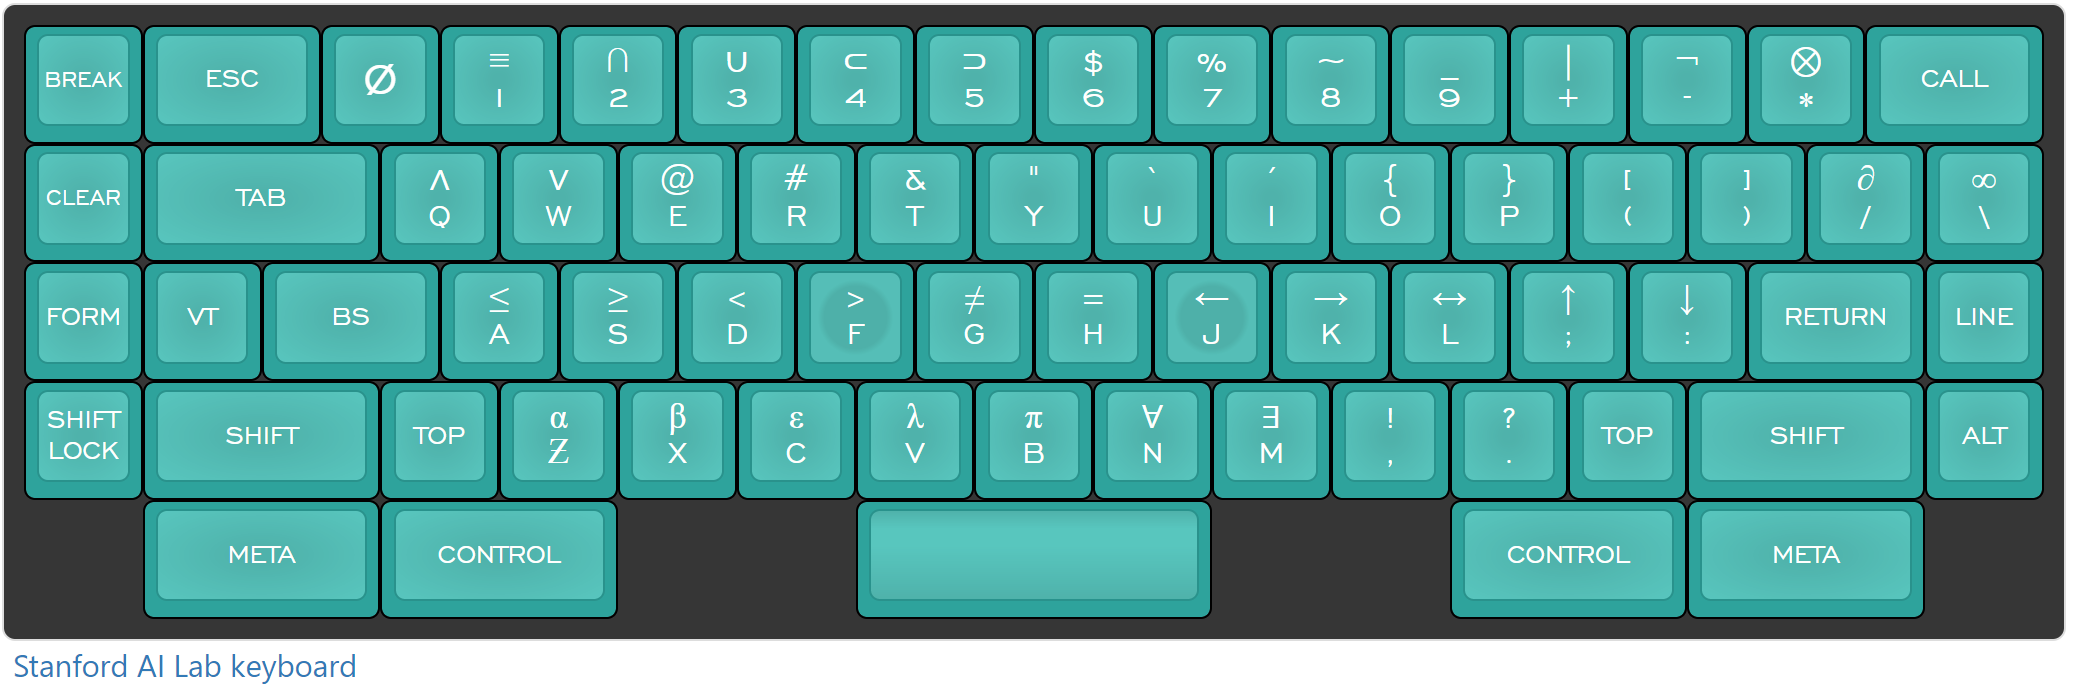 Sail Keyboard layout 2022 r2Rnx